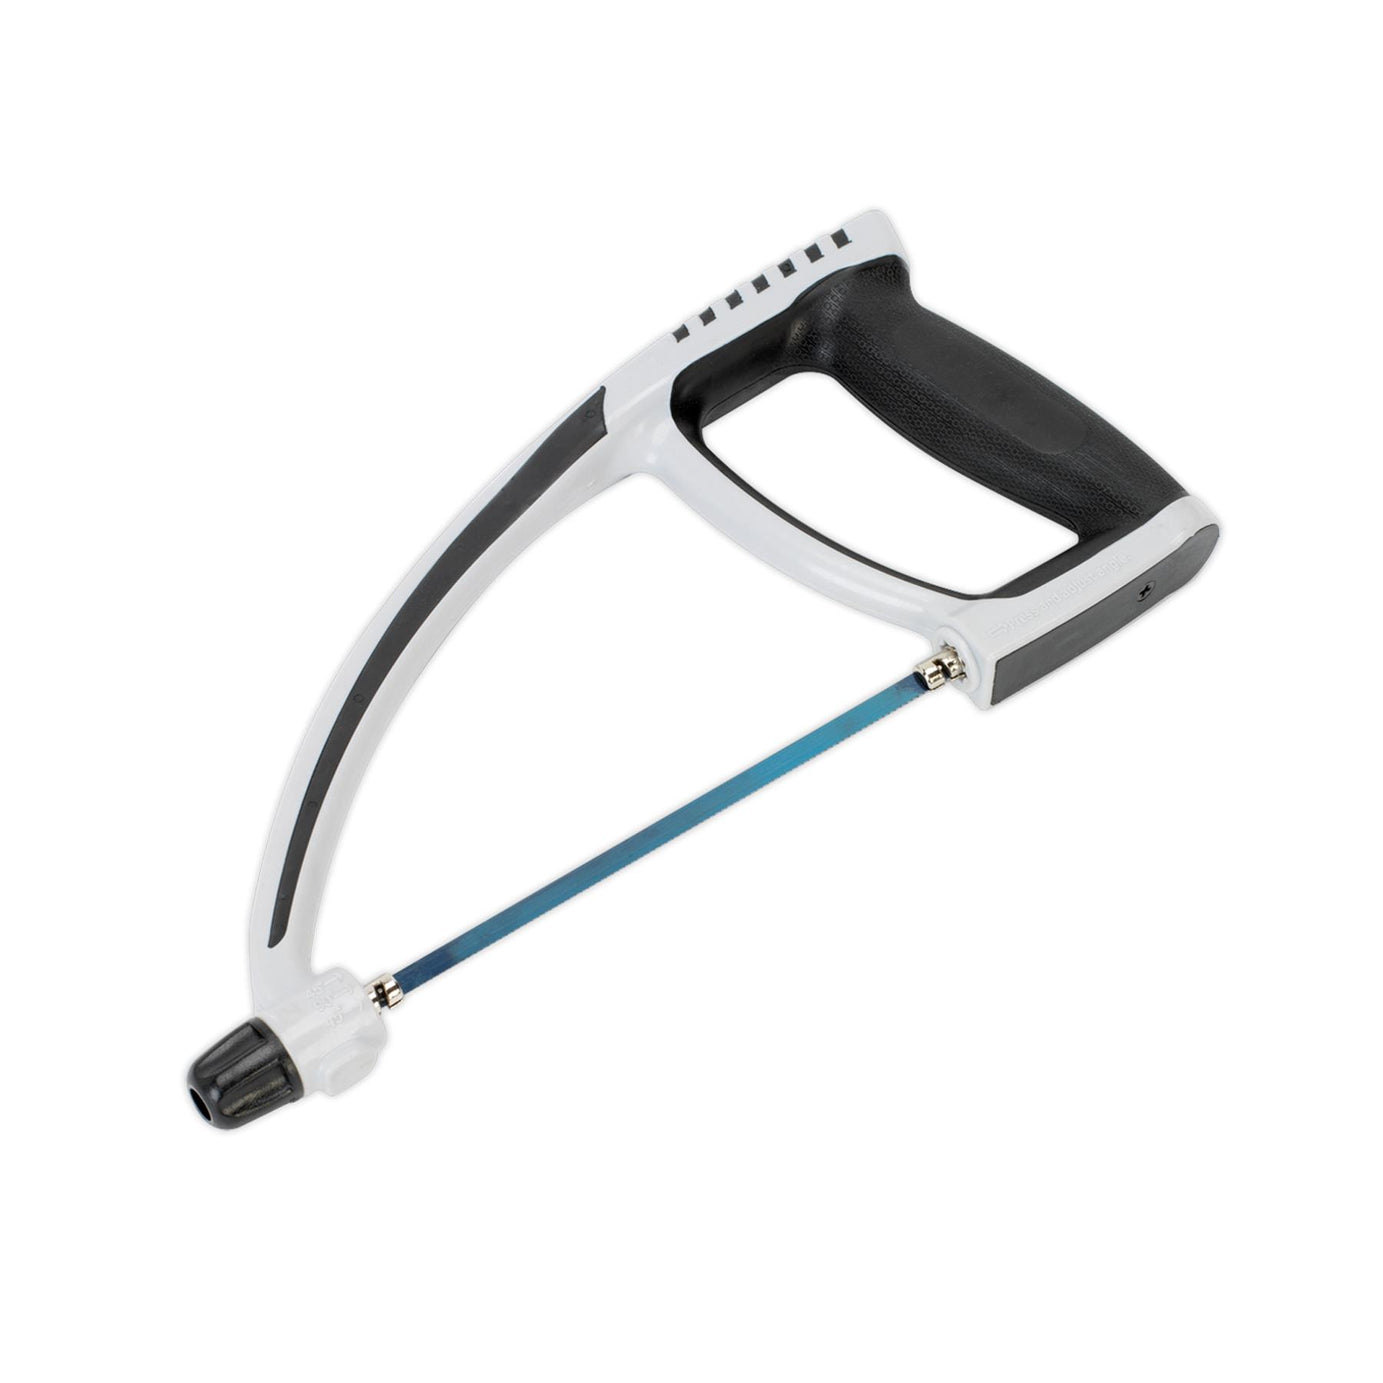 Sealey Mini Hacksaw with Adjustable Blade 150mm